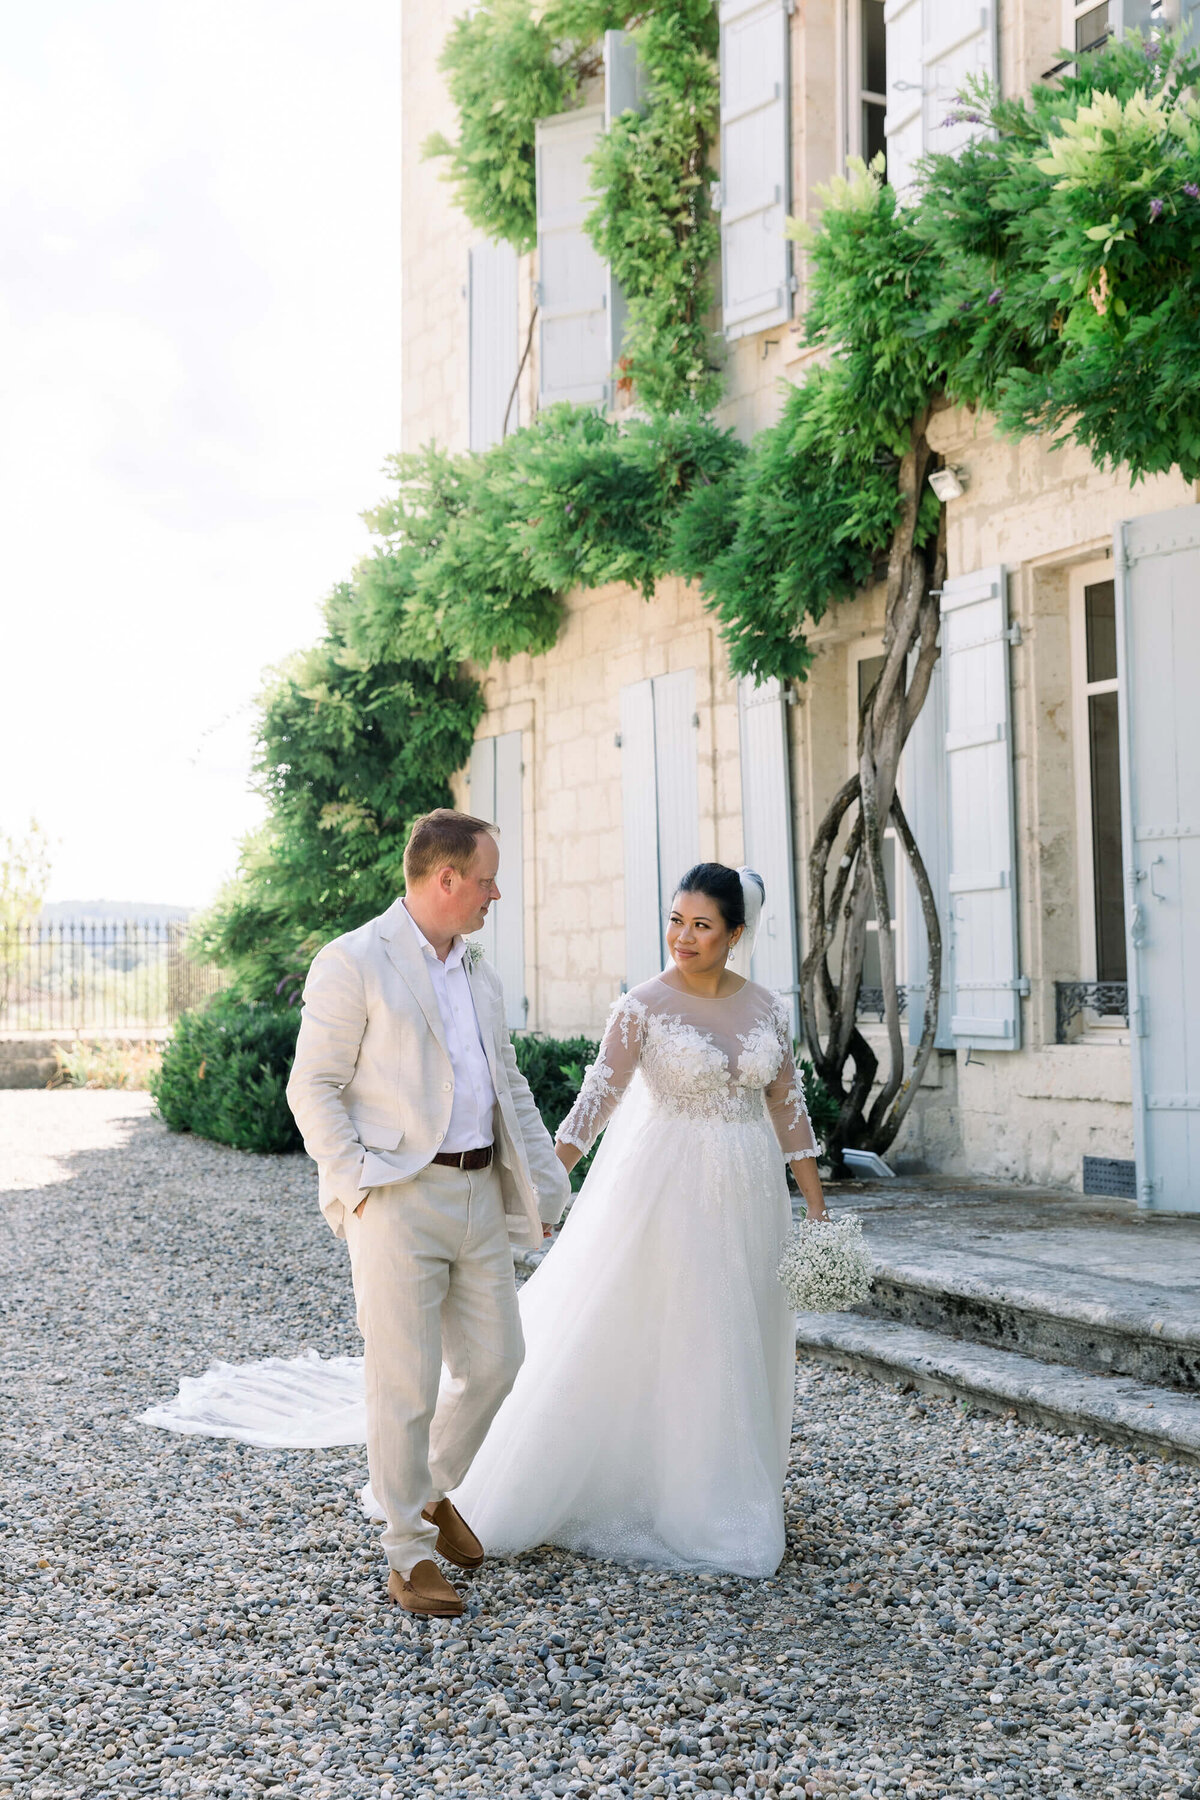 Victoria Engelen Flowers - A White Wedding in a French Chateau - JoannaandMattWedding_DariaLormanPhotography-585